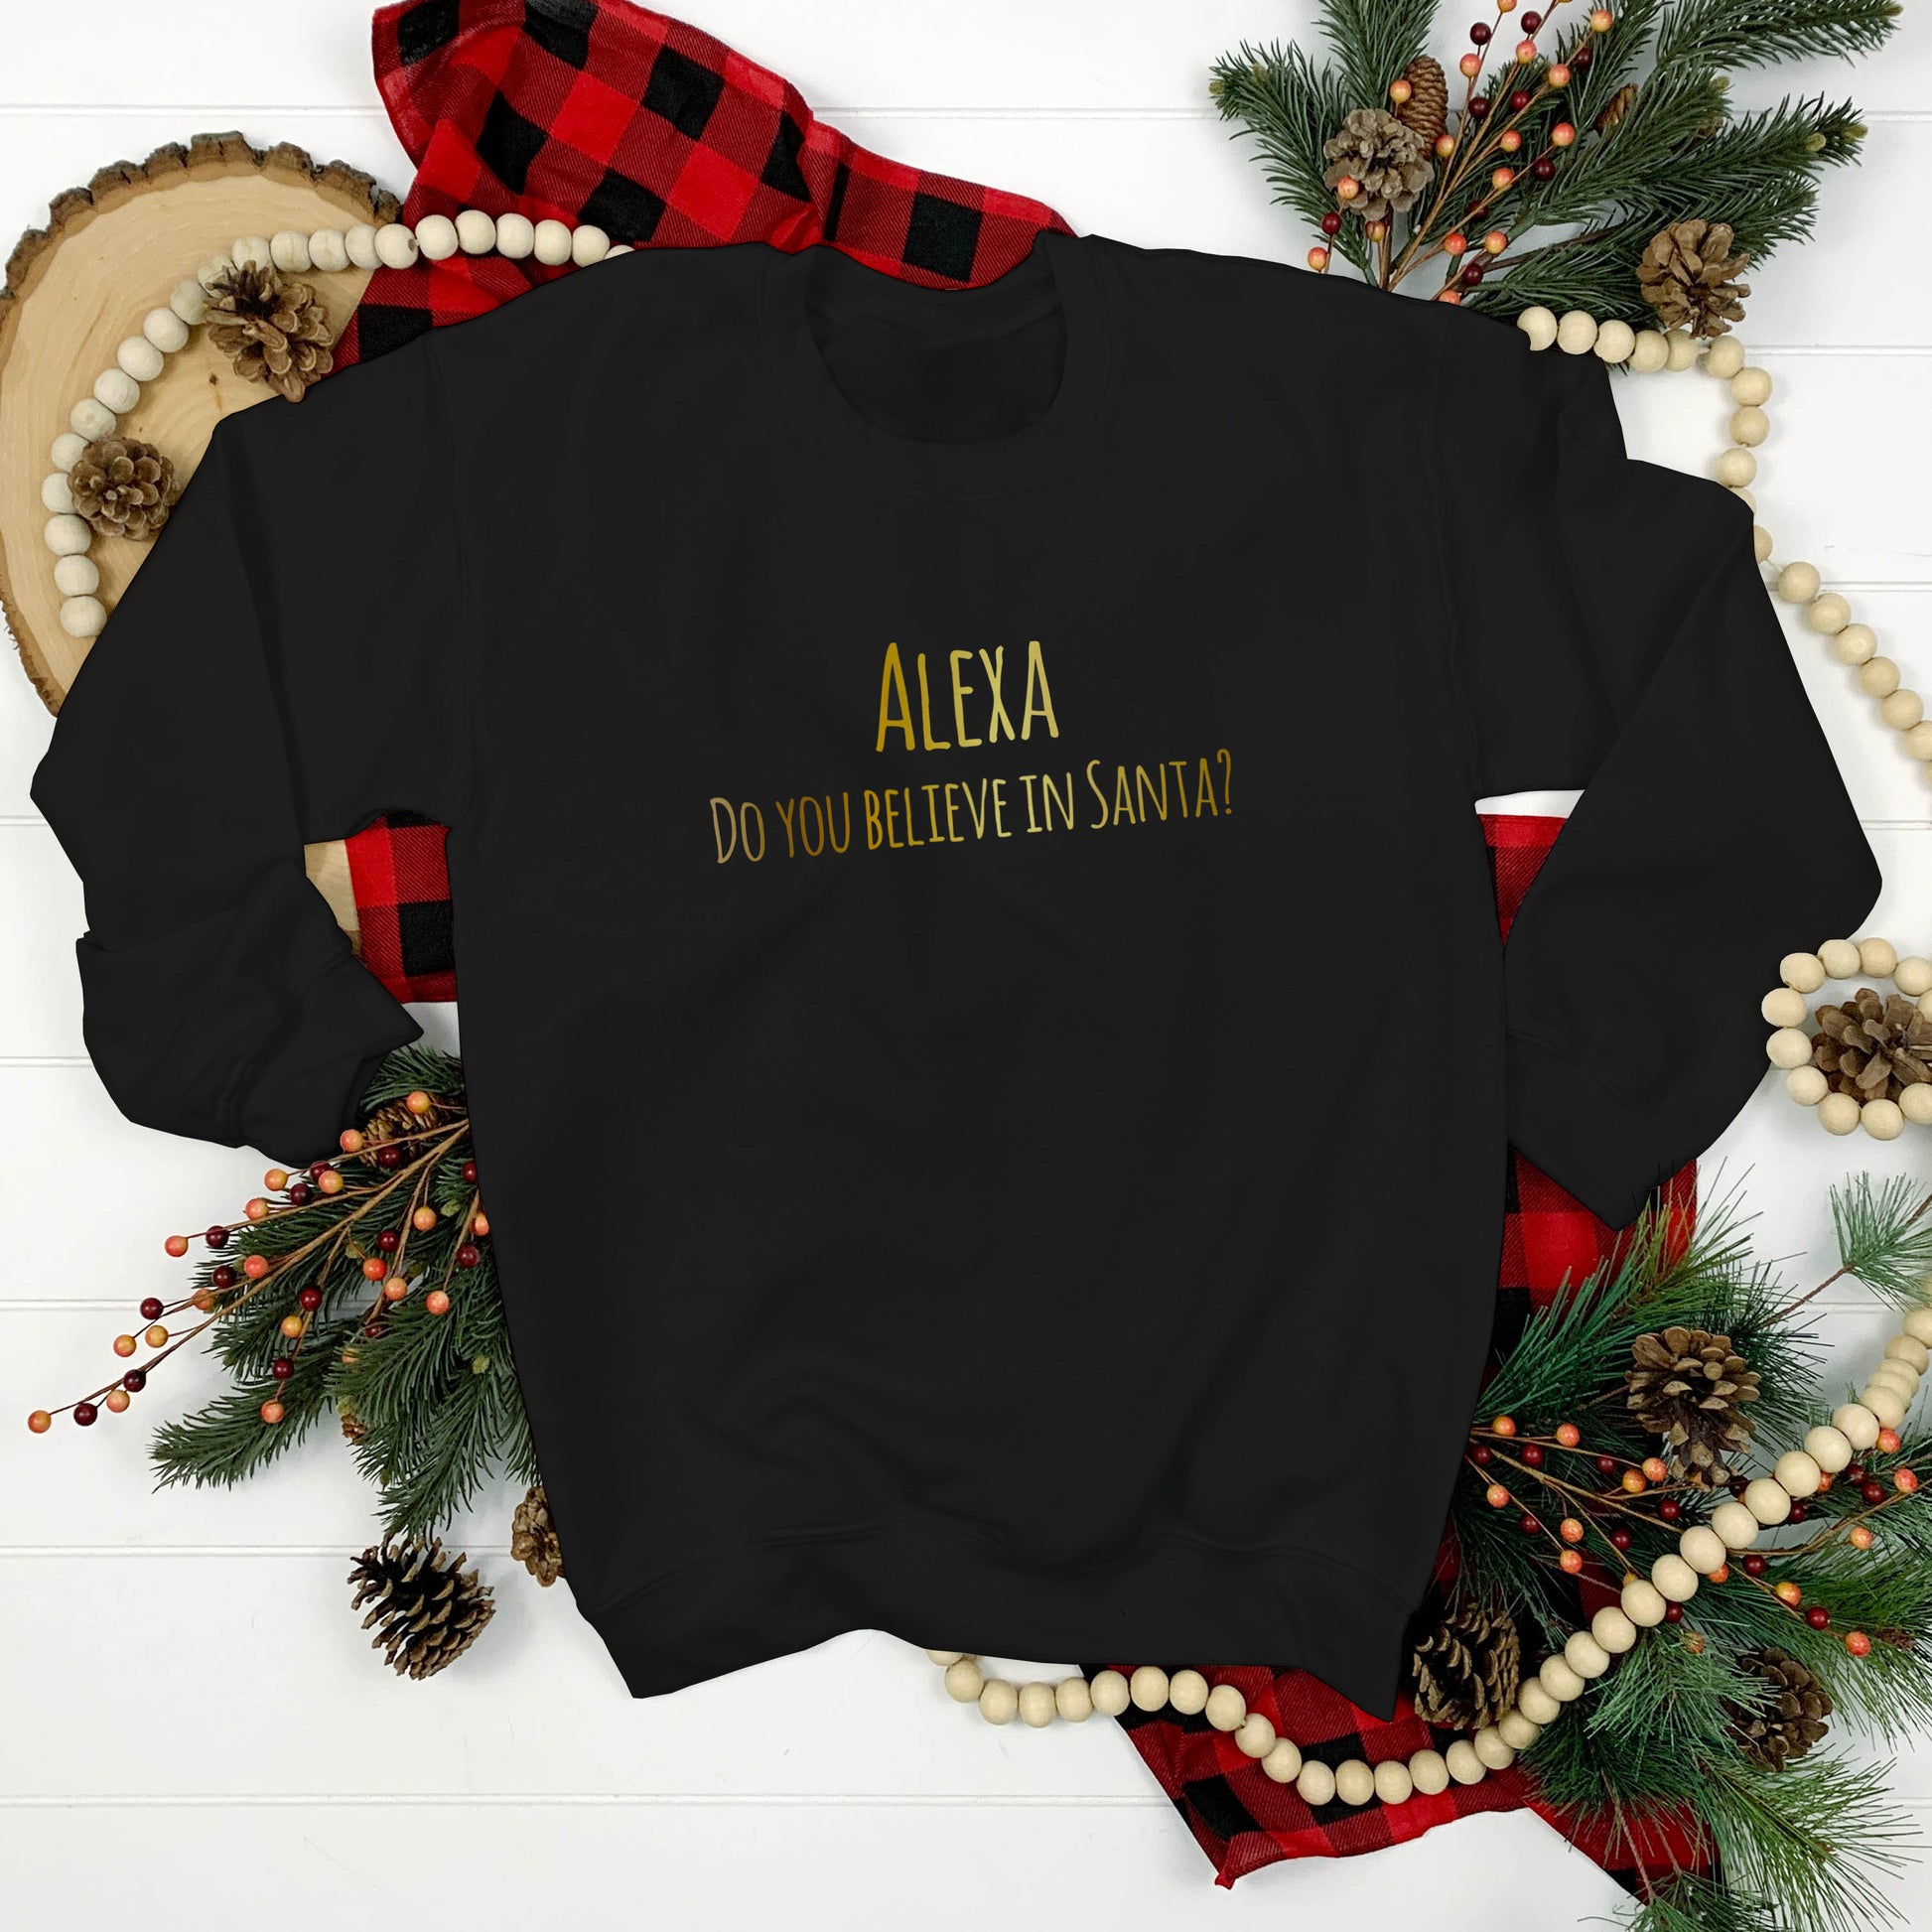 Alexa do you believe in Santa Christmas jumper funny alexa slogan sweatshirt funny alex christmas jumper